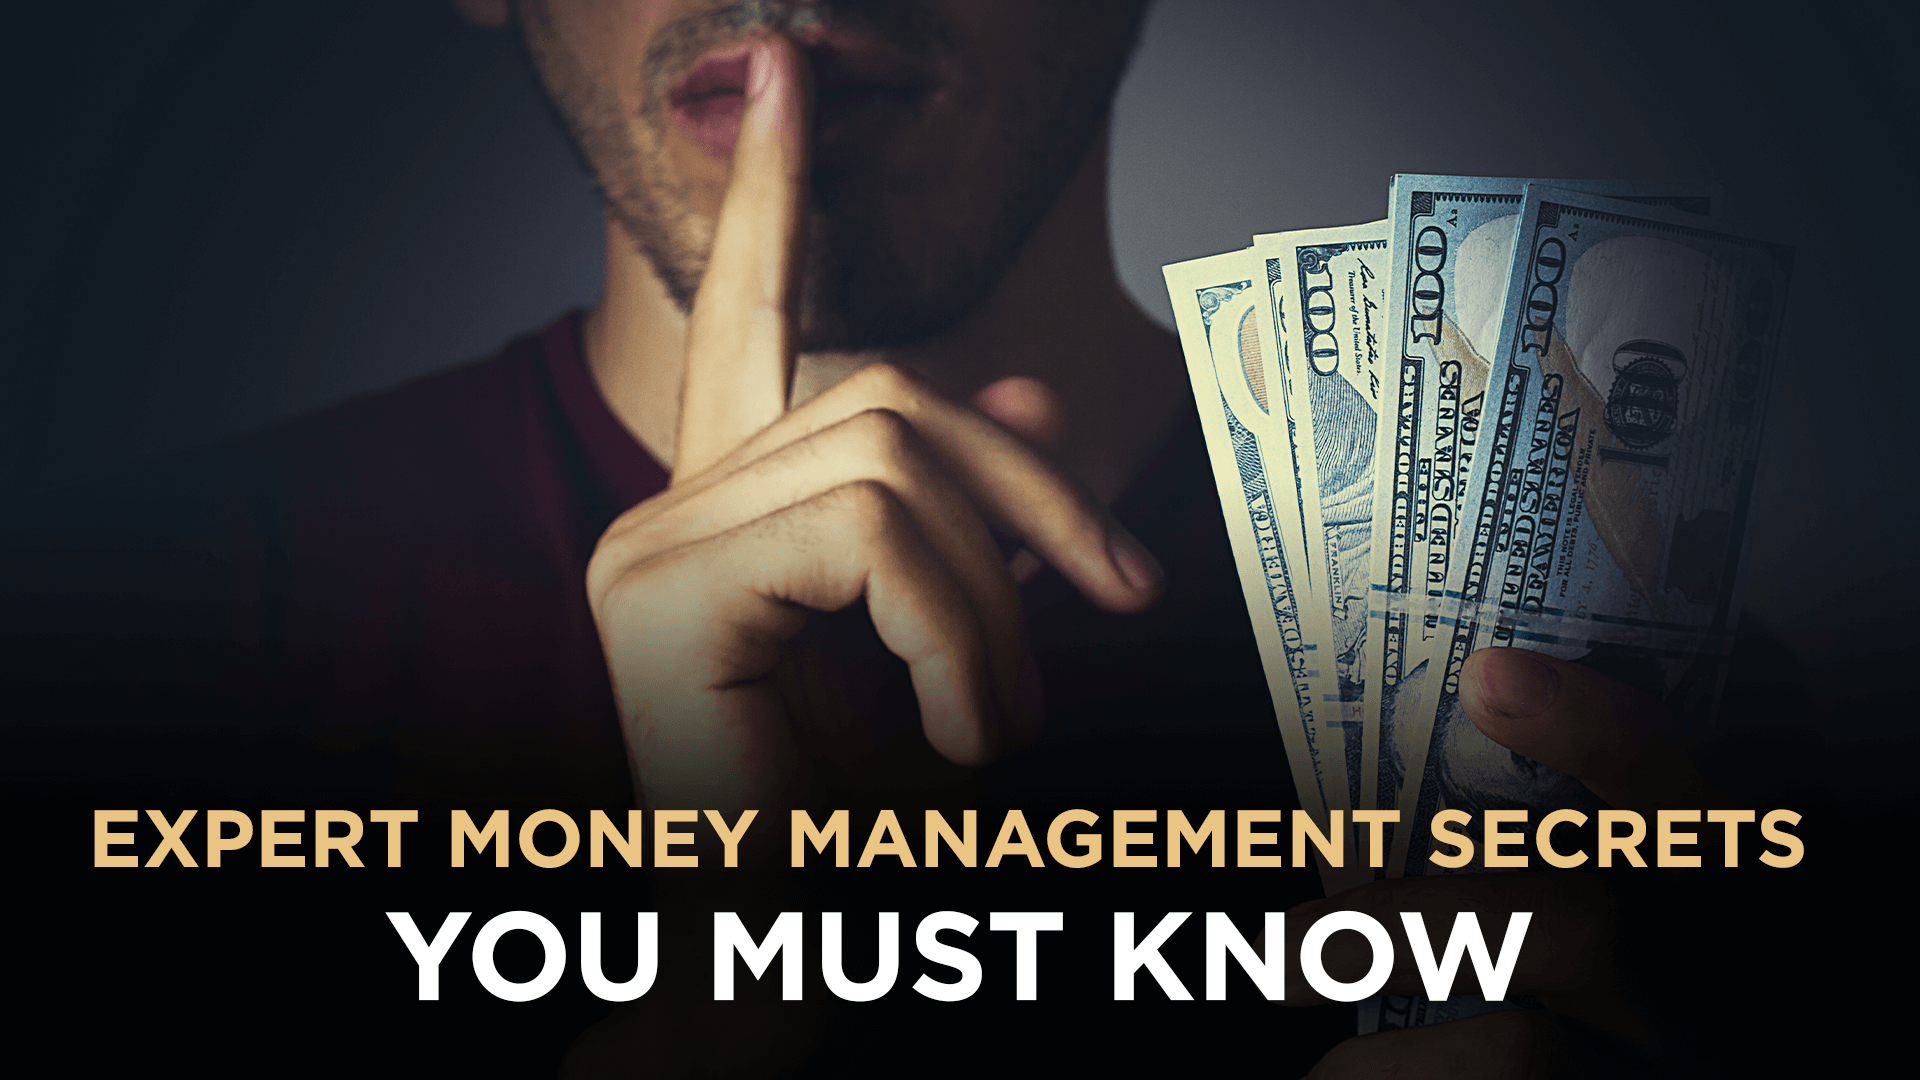 Expert money management secrets you must know